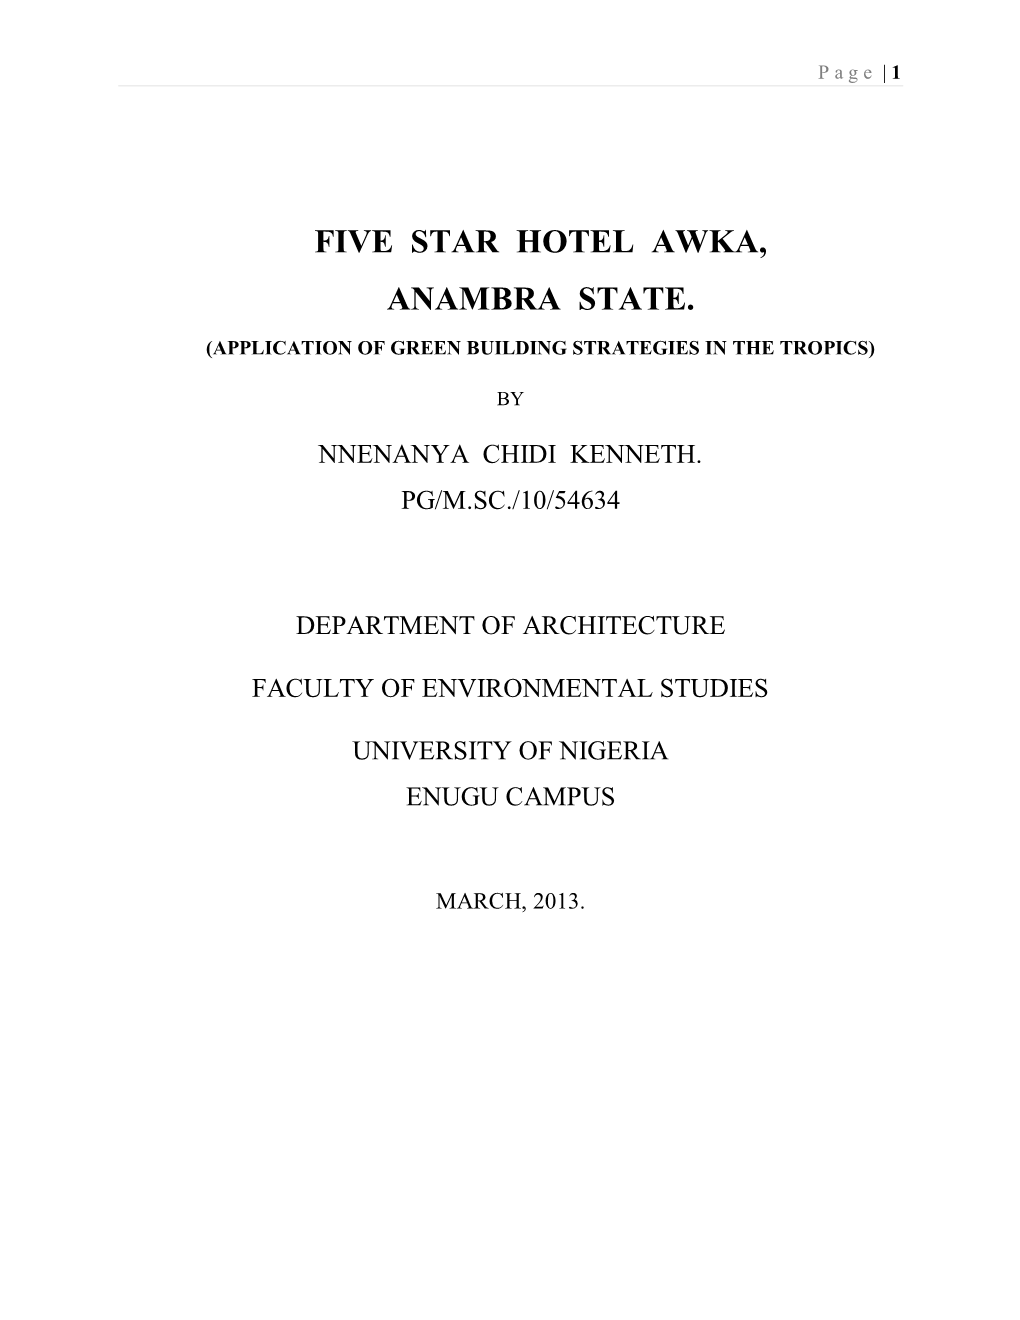 Five Star Hotel Awka, Anambra State